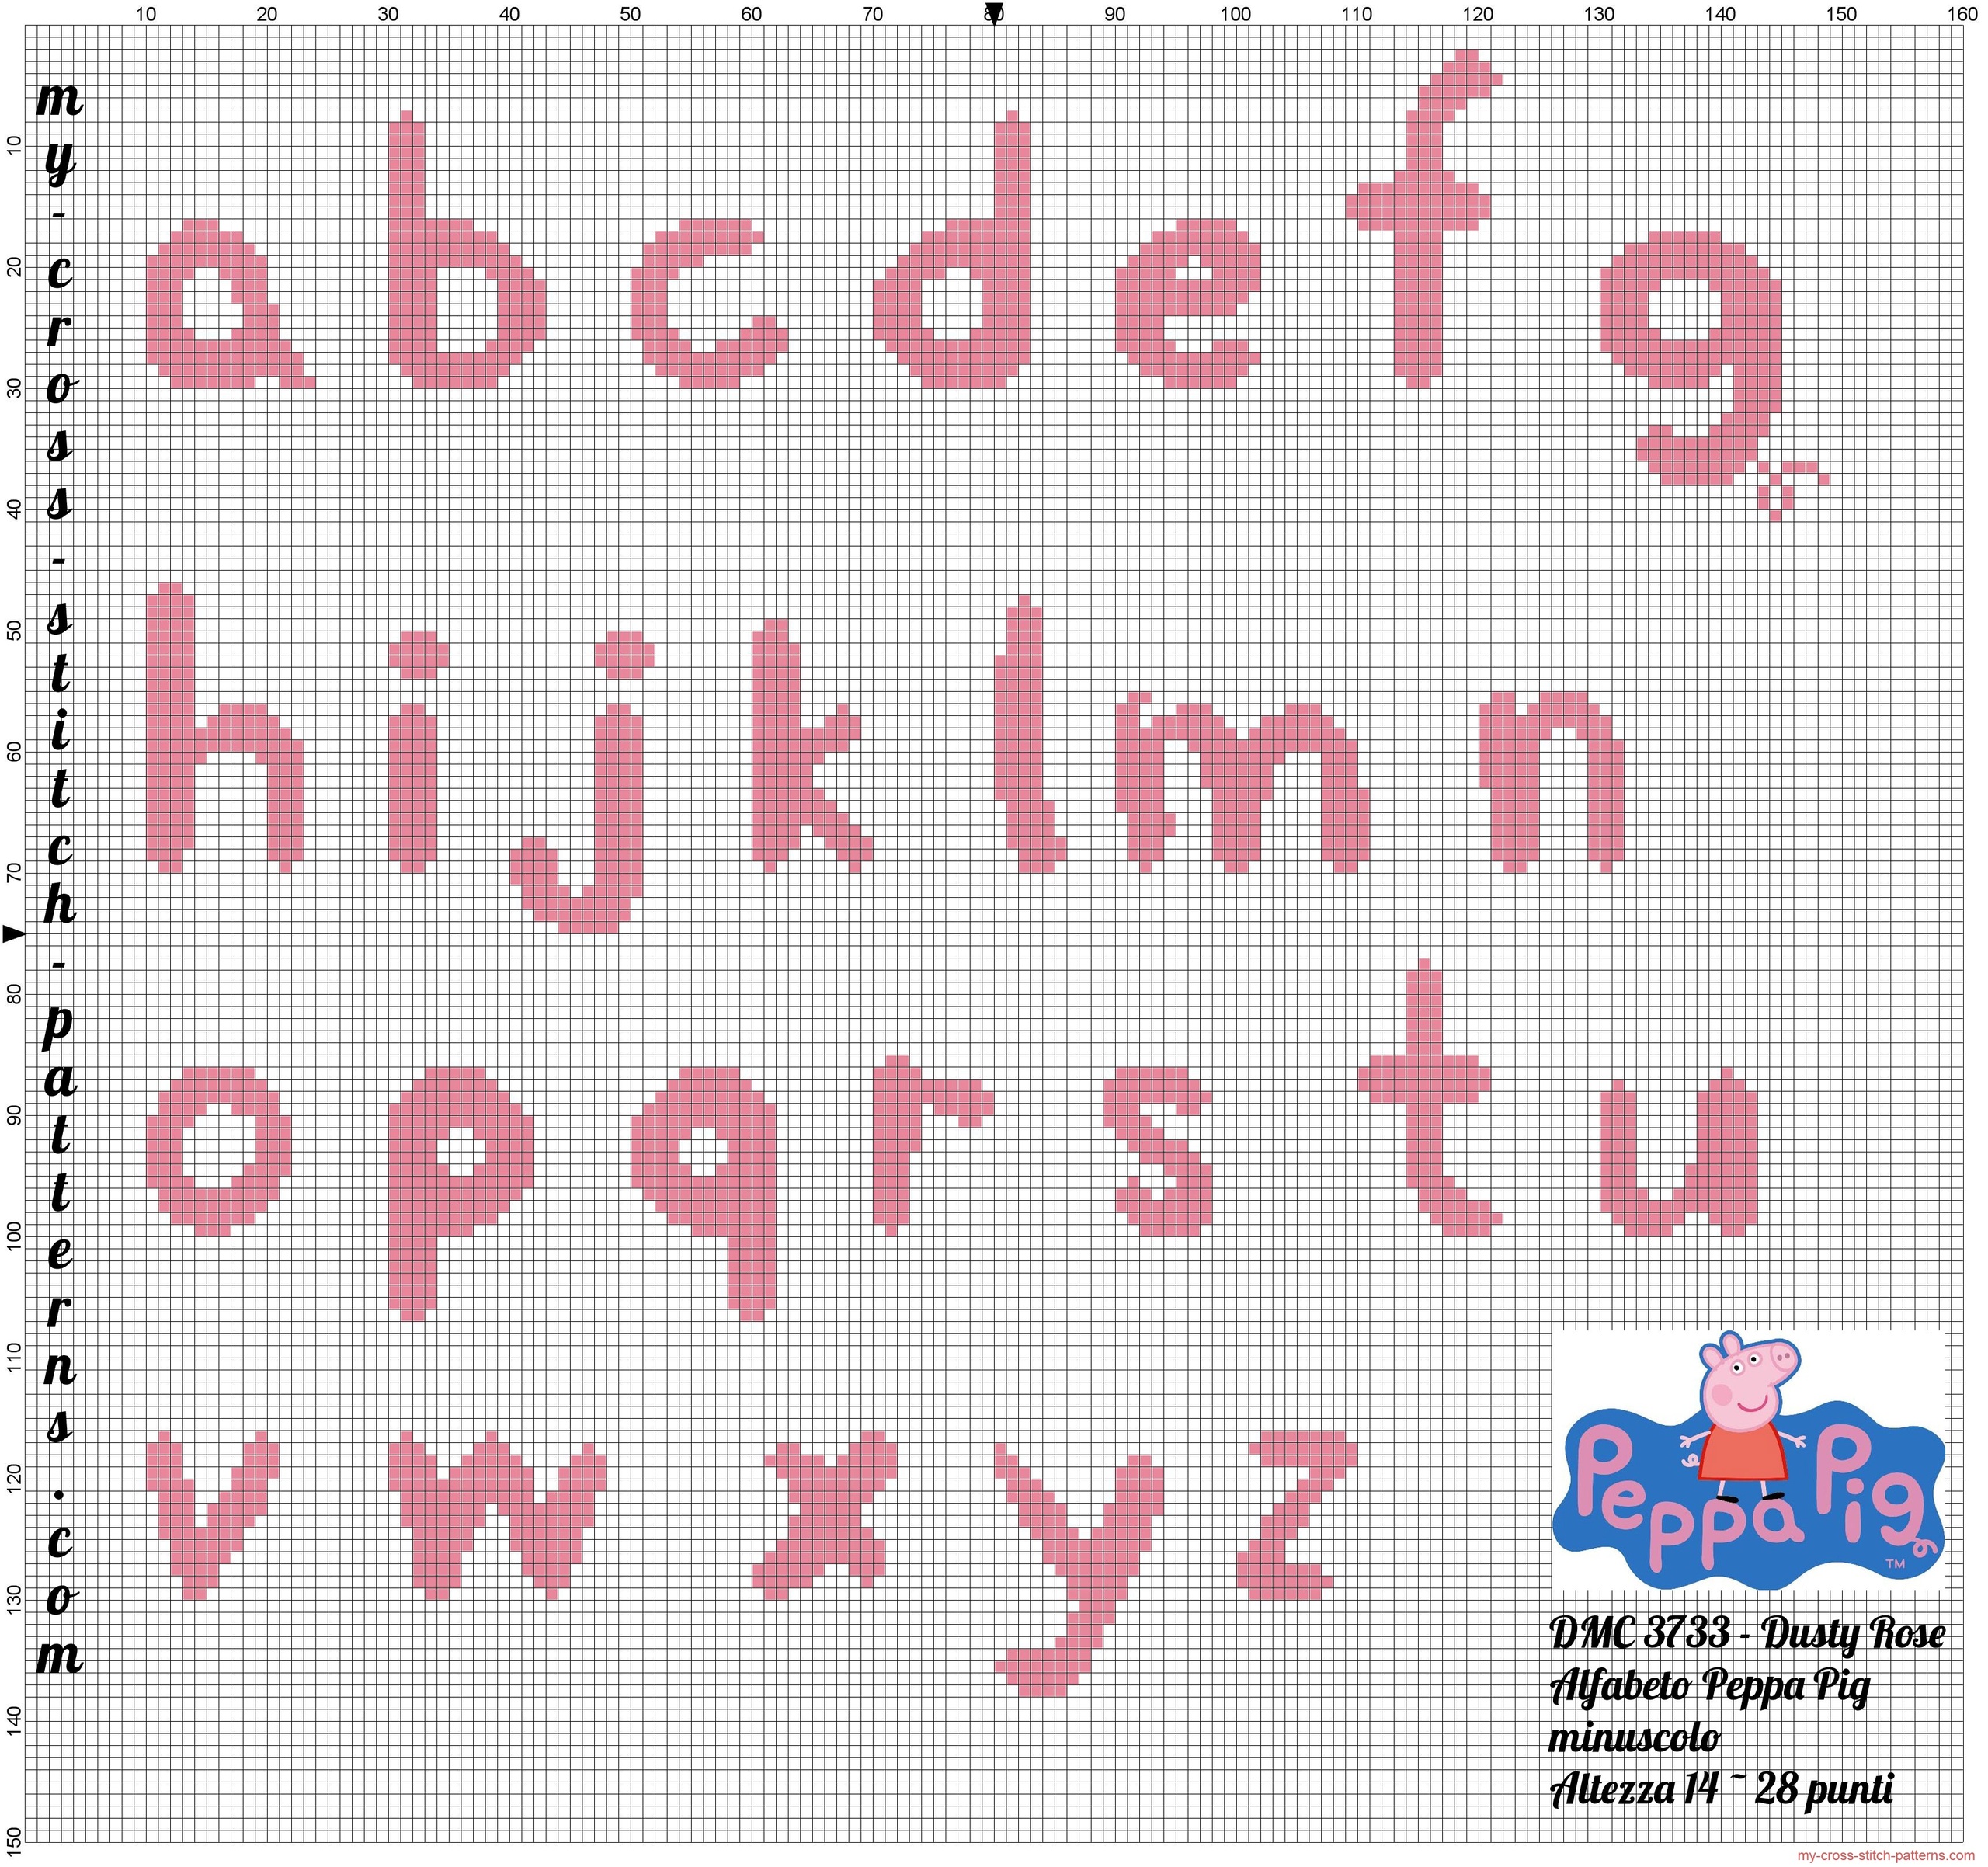 cross_stitch_alphabet_peppa_pig_lowercase